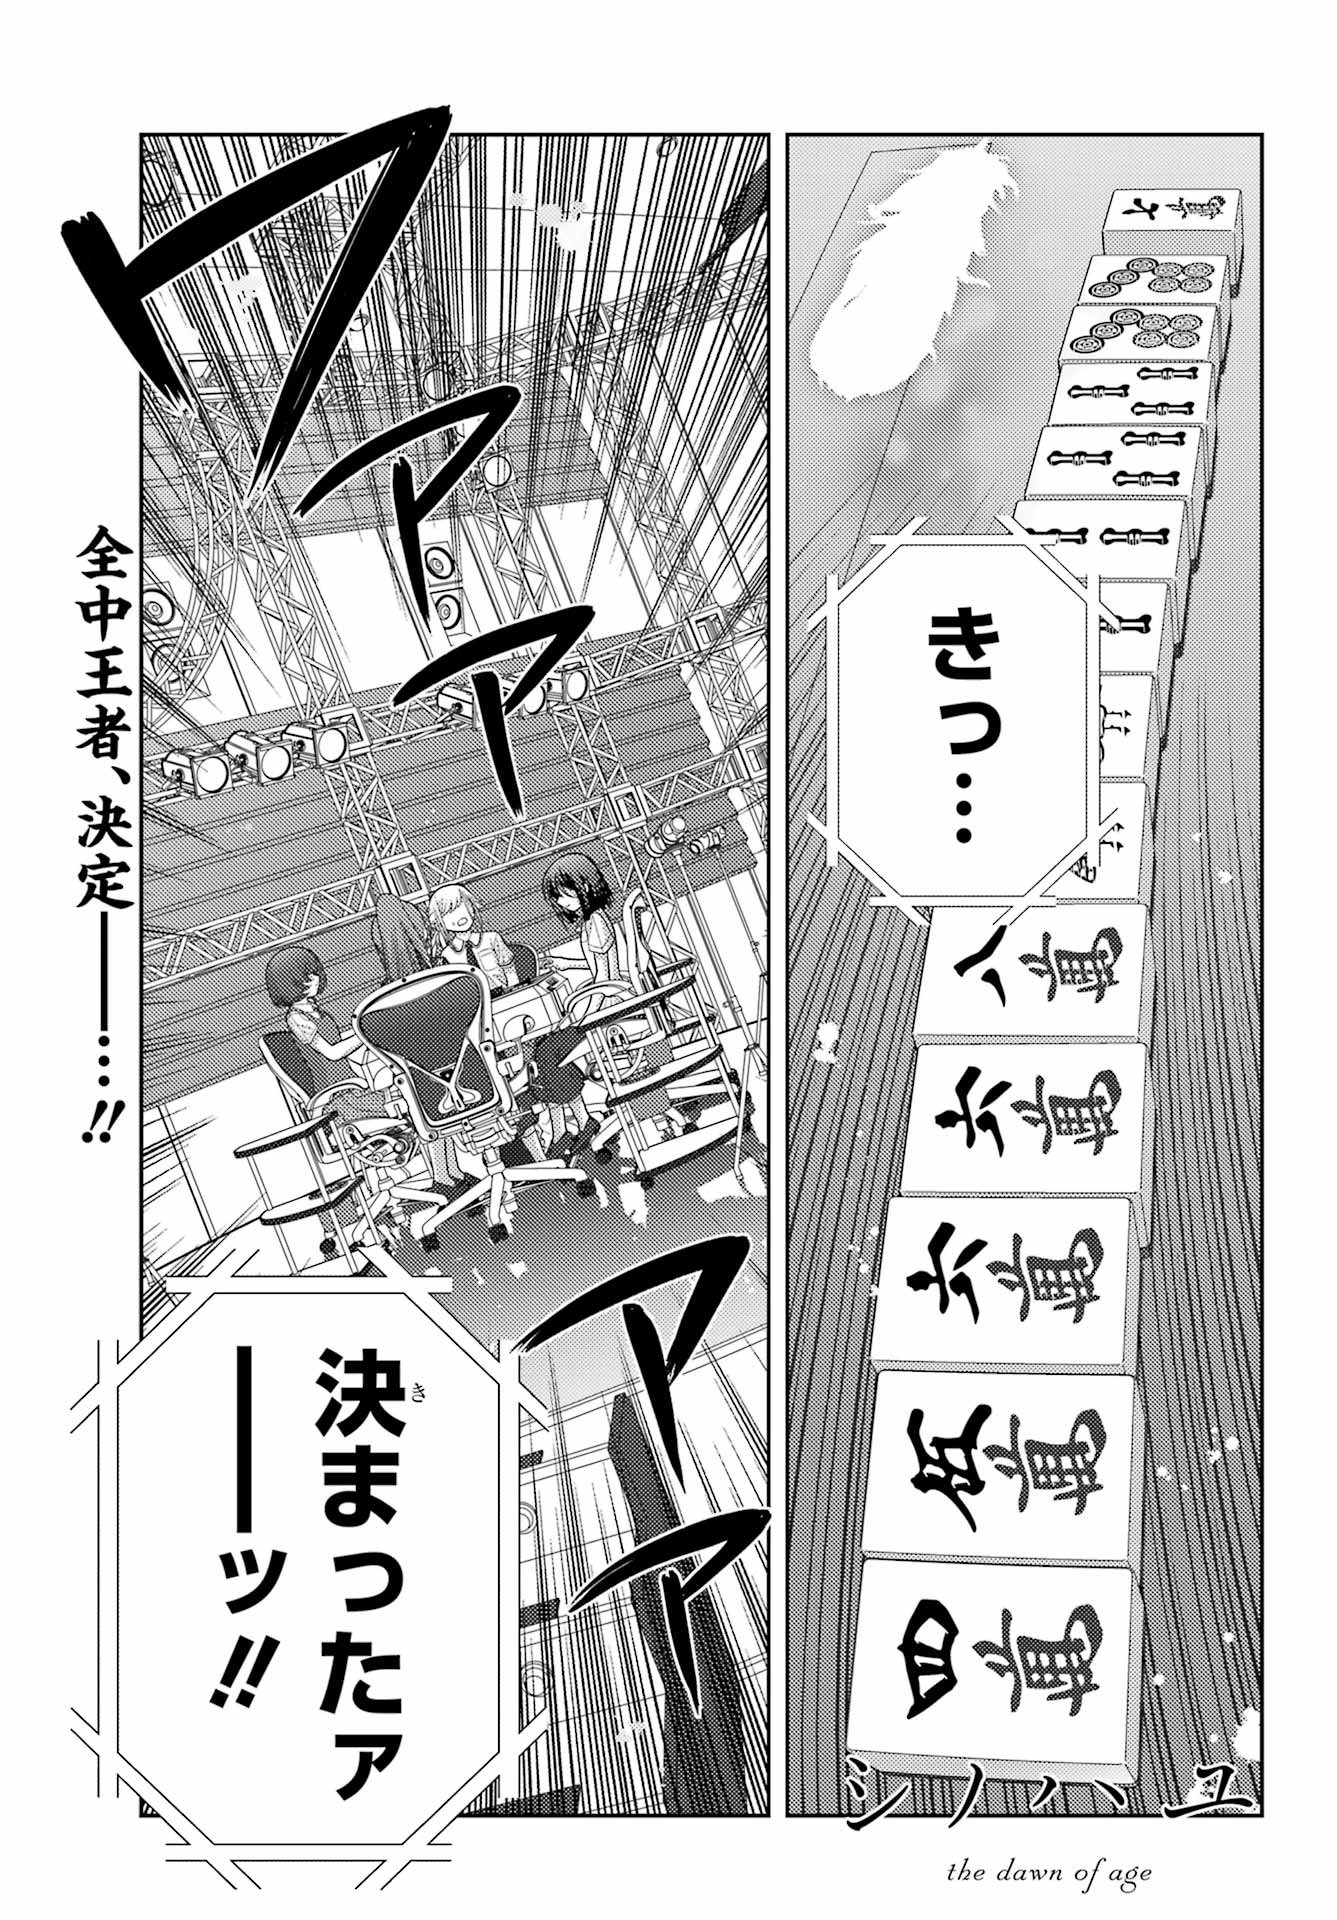 Shinohayu - The Dawn of Age Manga - Chapter 101 - Page 1